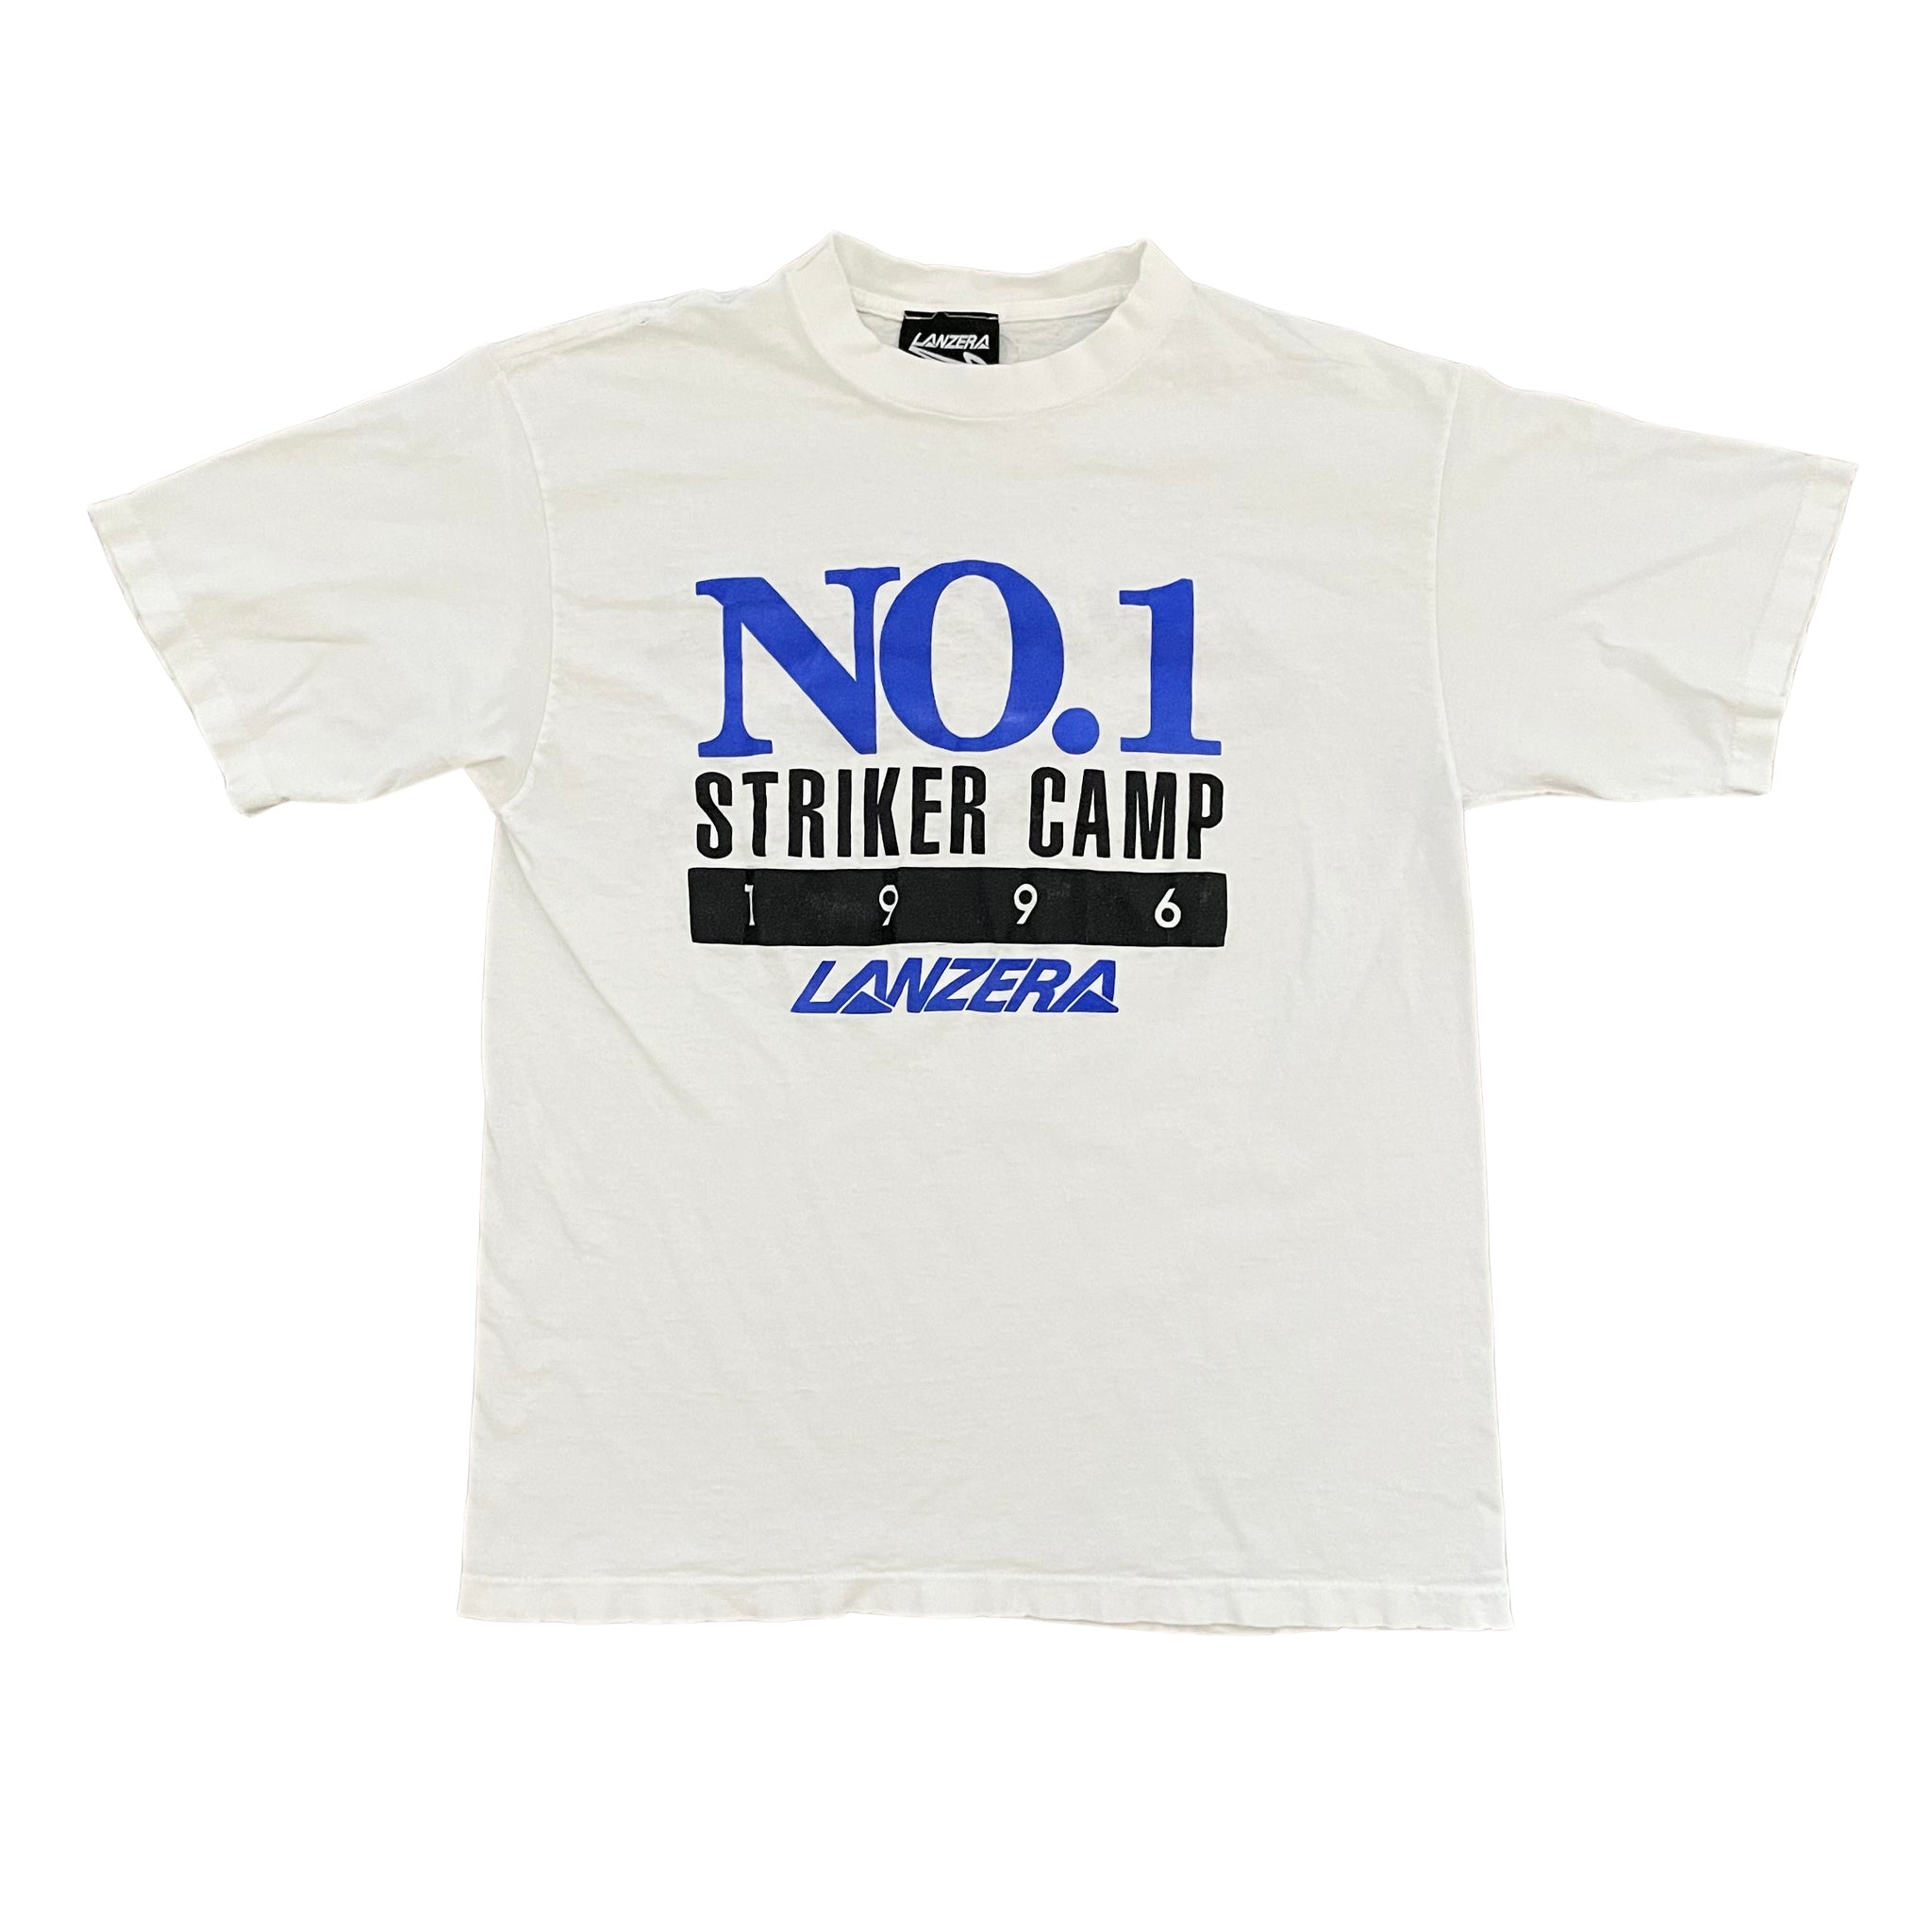 Lanzera No. 1 Striker Camp T-Shirt - M